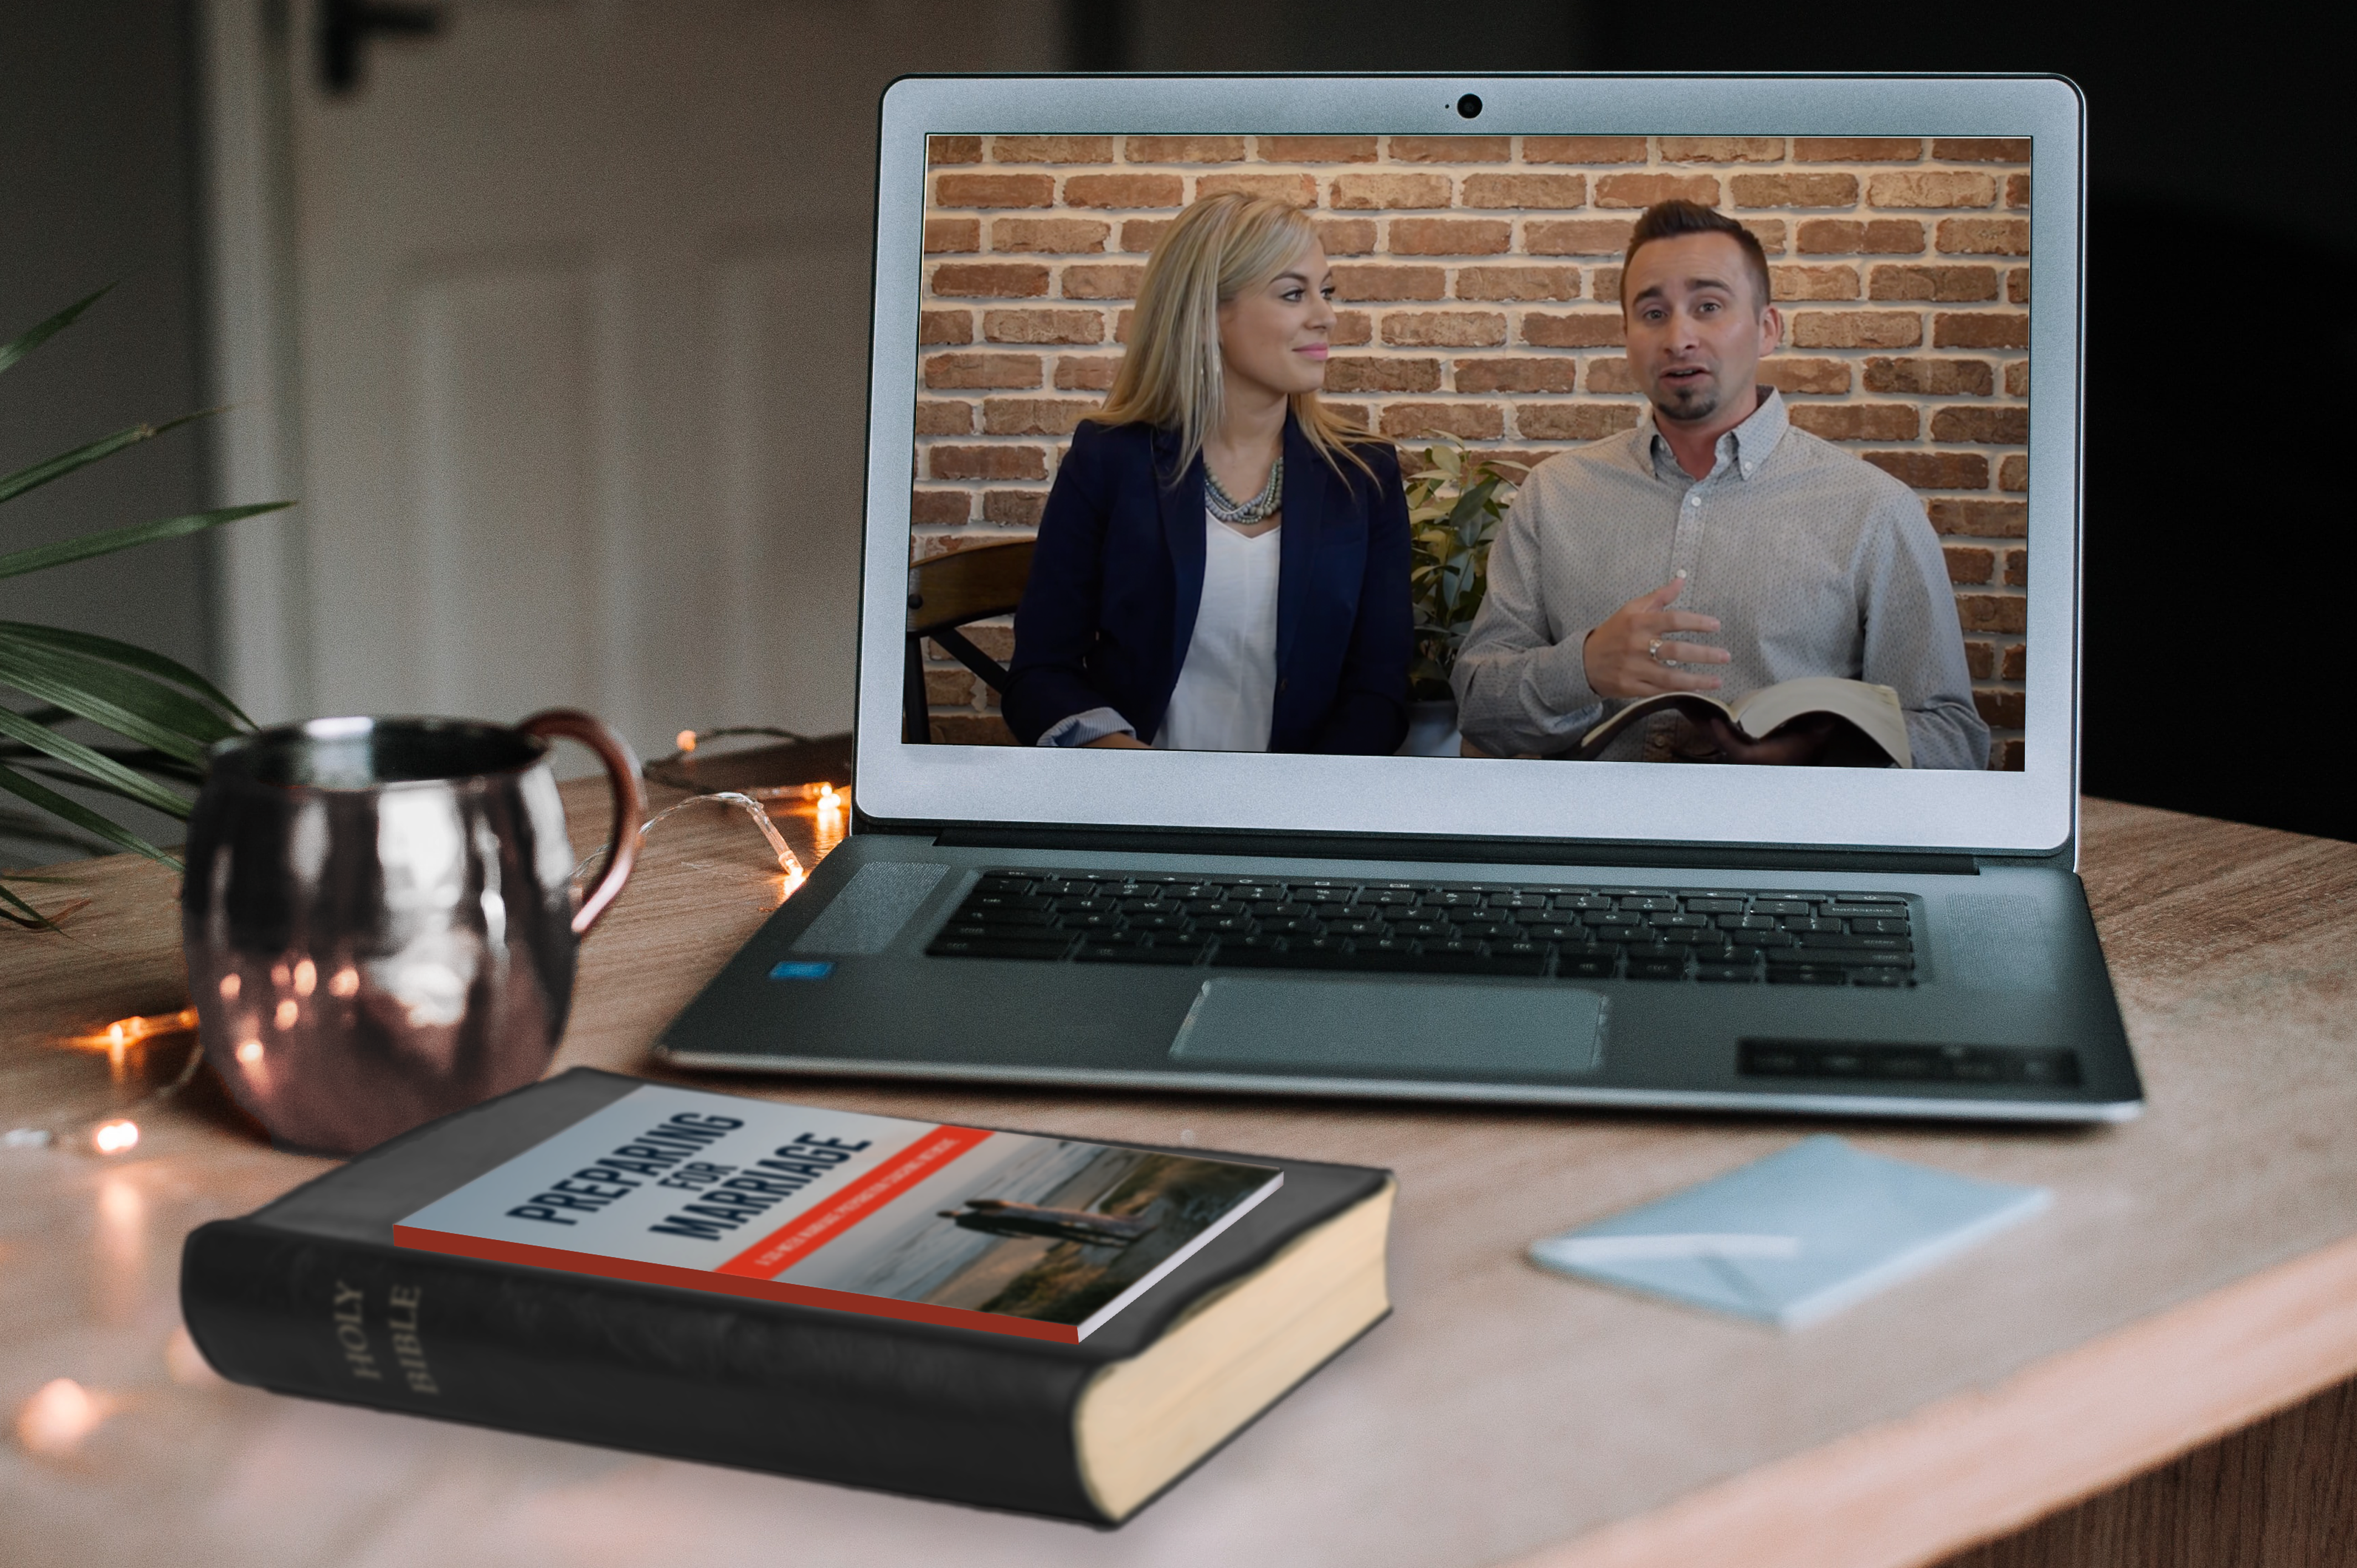 Exploring Scripture: A Roundup of Engaging Bible Study Videos